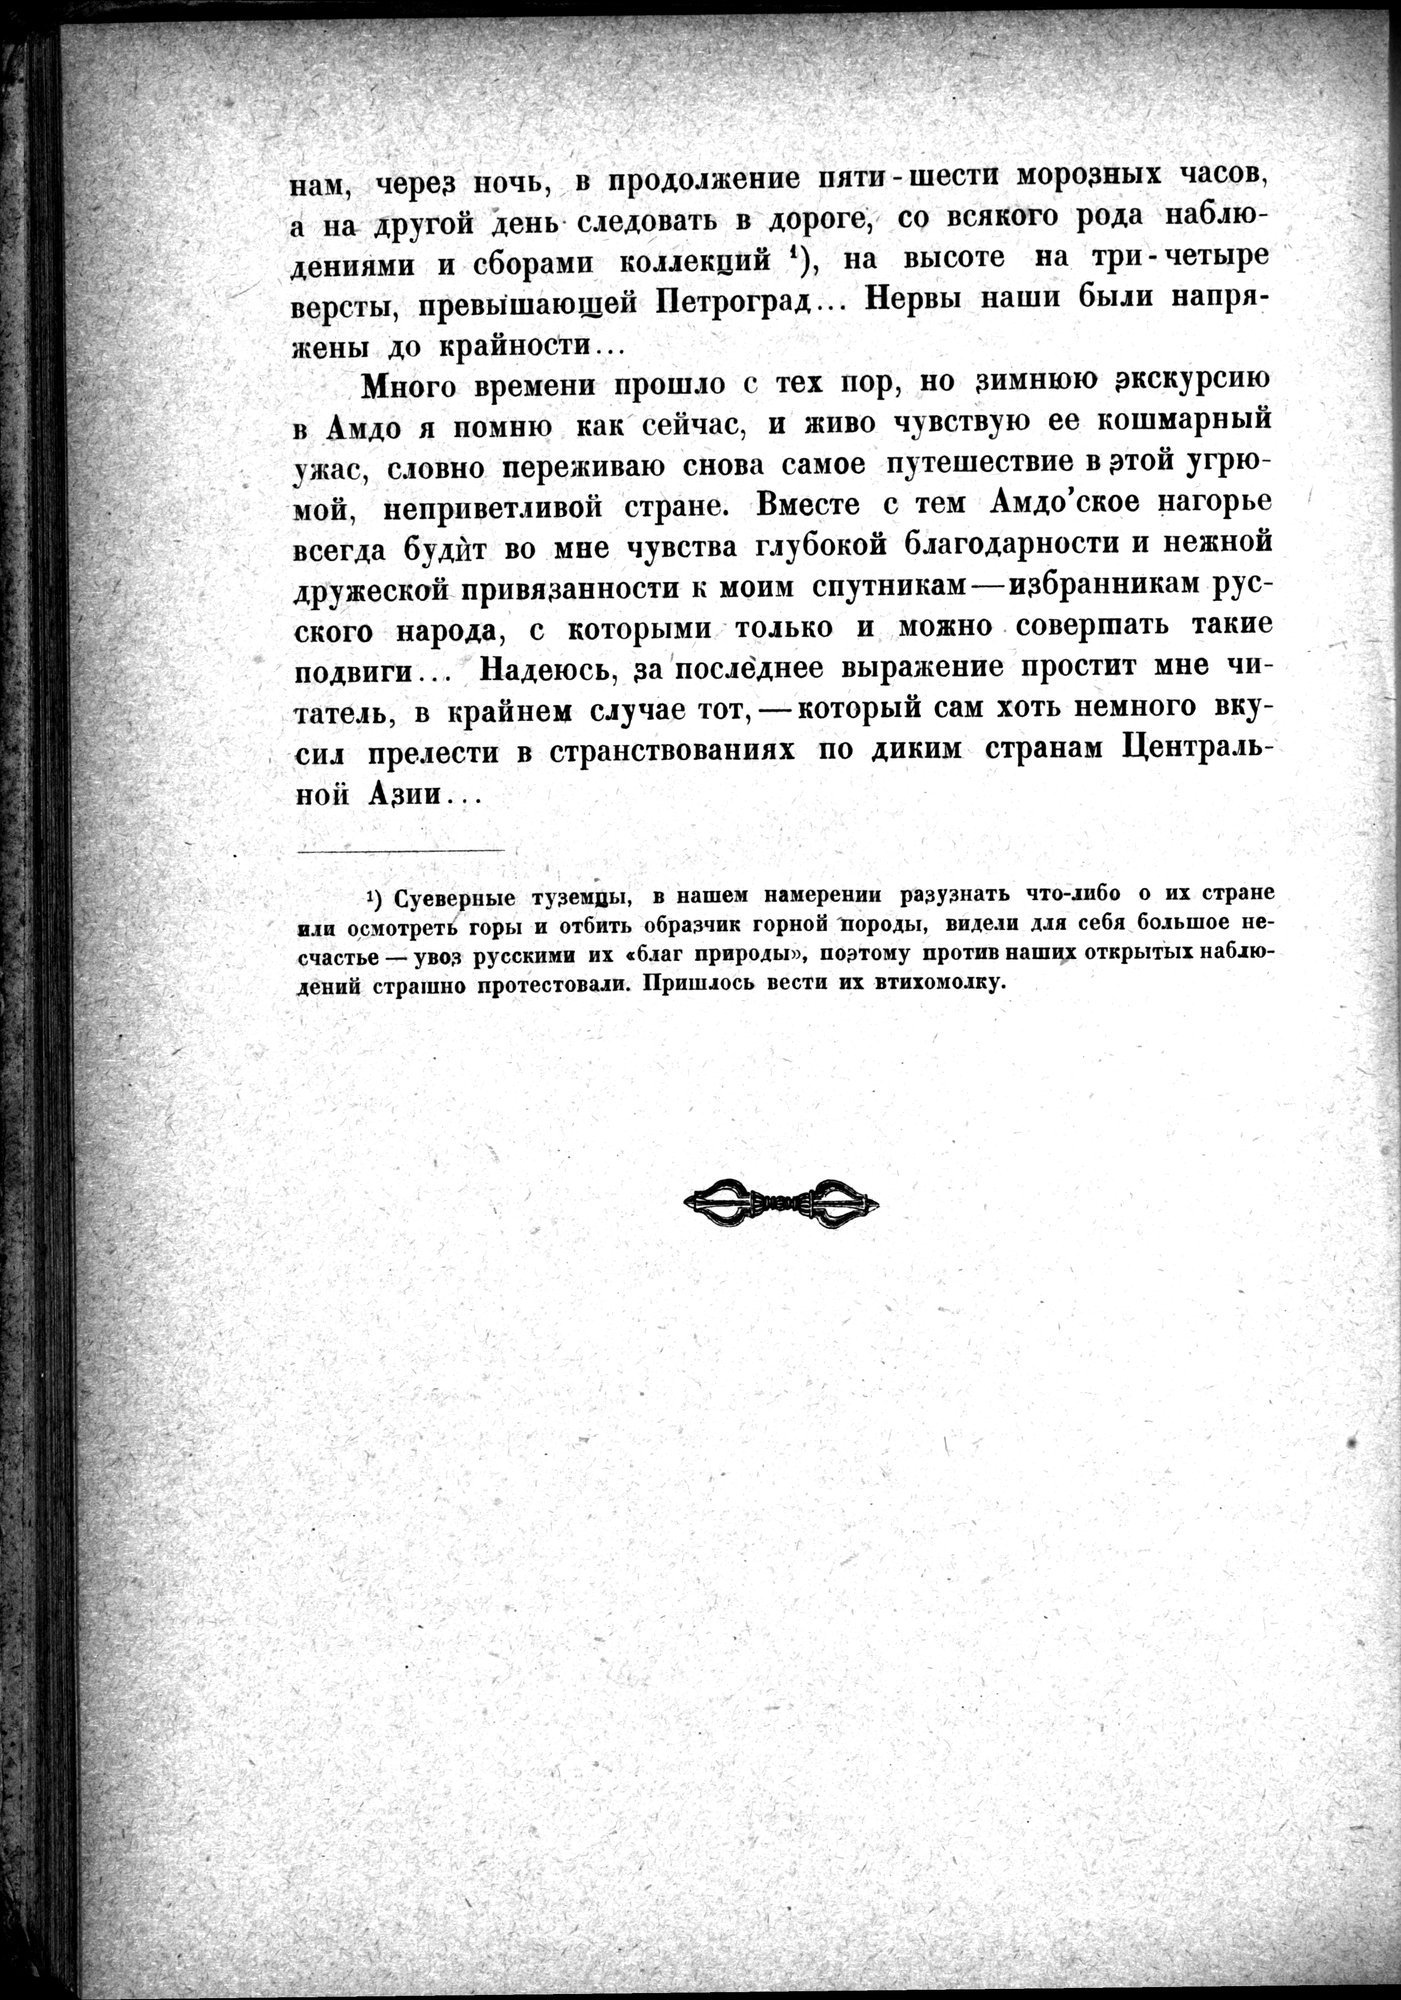 Mongoliya i Amdo i mertby gorod Khara-Khoto : vol.1 / Page 492 (Grayscale High Resolution Image)